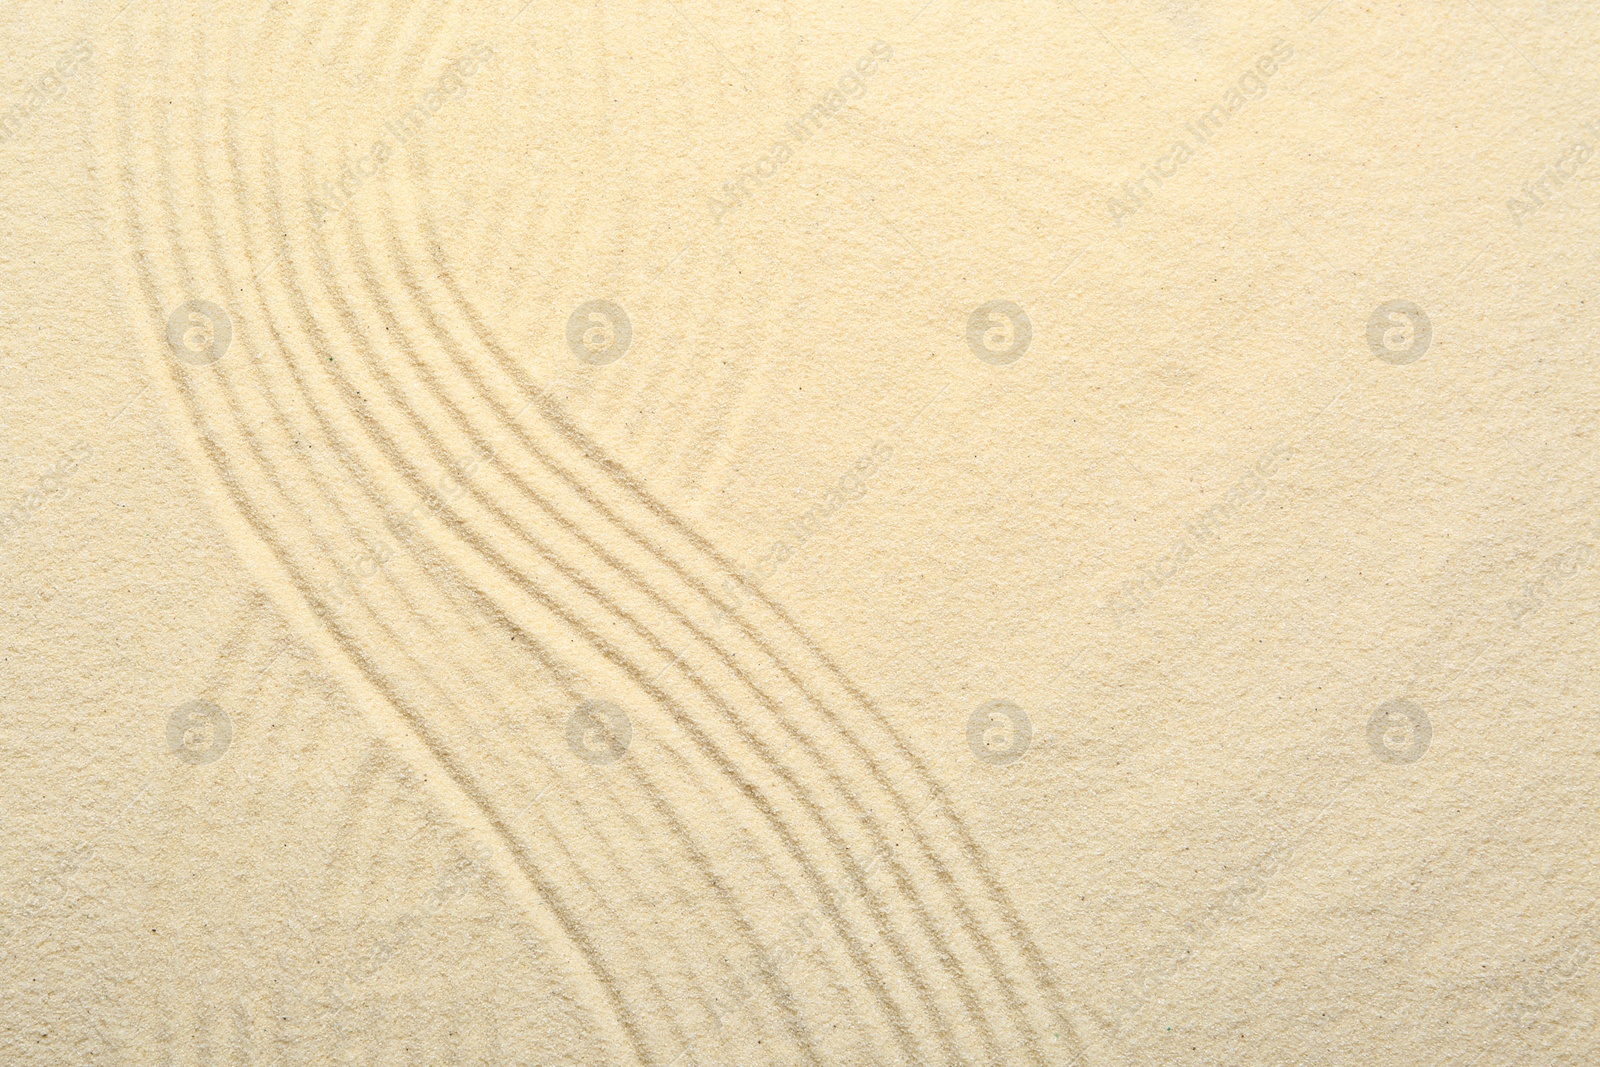 Photo of Zen rock garden. Wave pattern on beige sand, top view